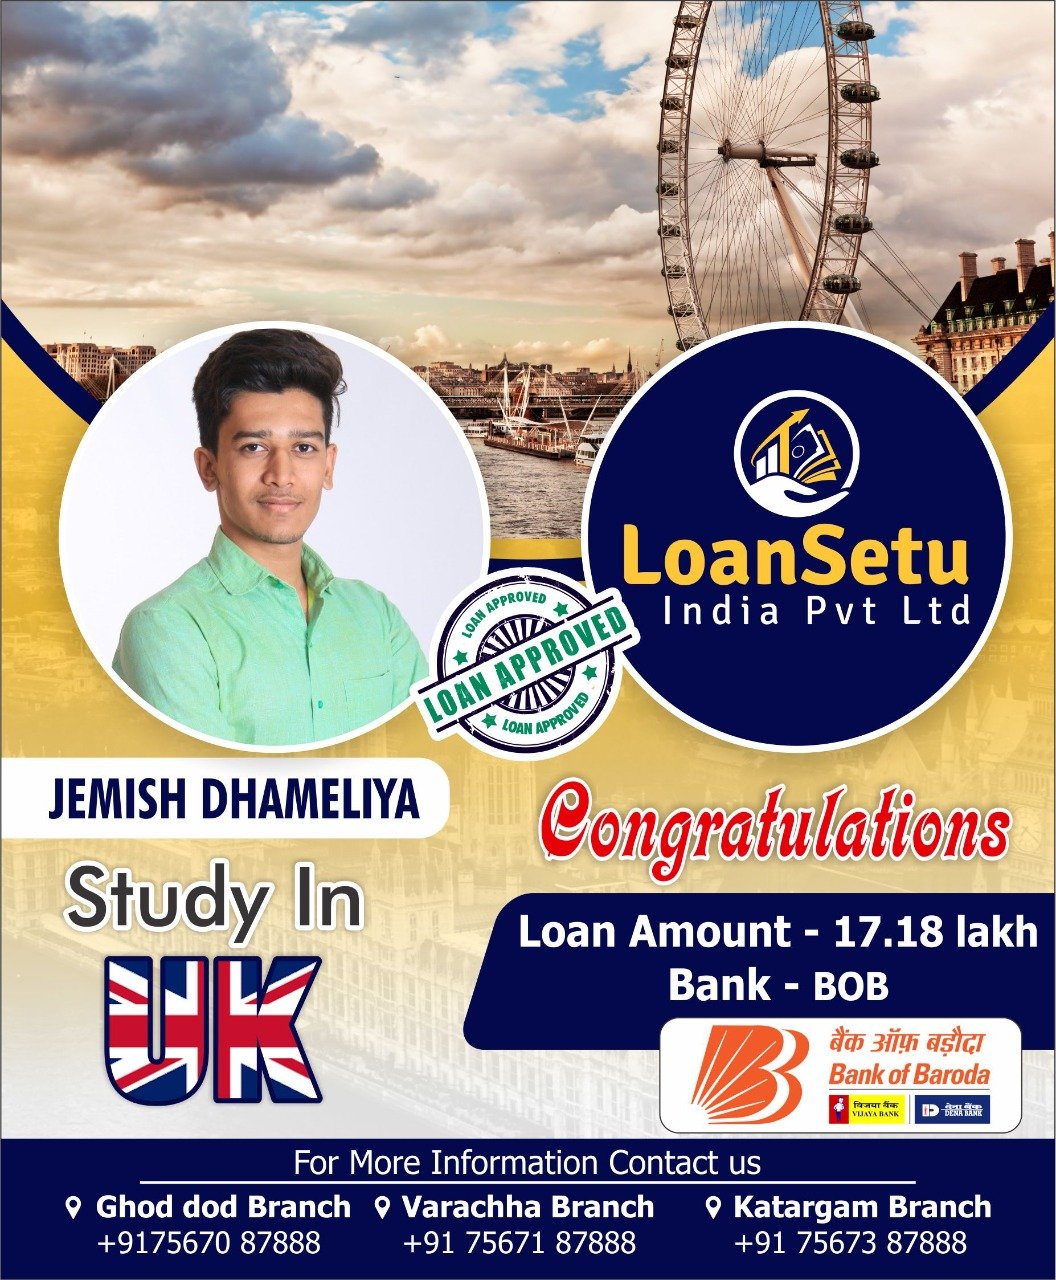 LoanSetu India Pvt Ltd